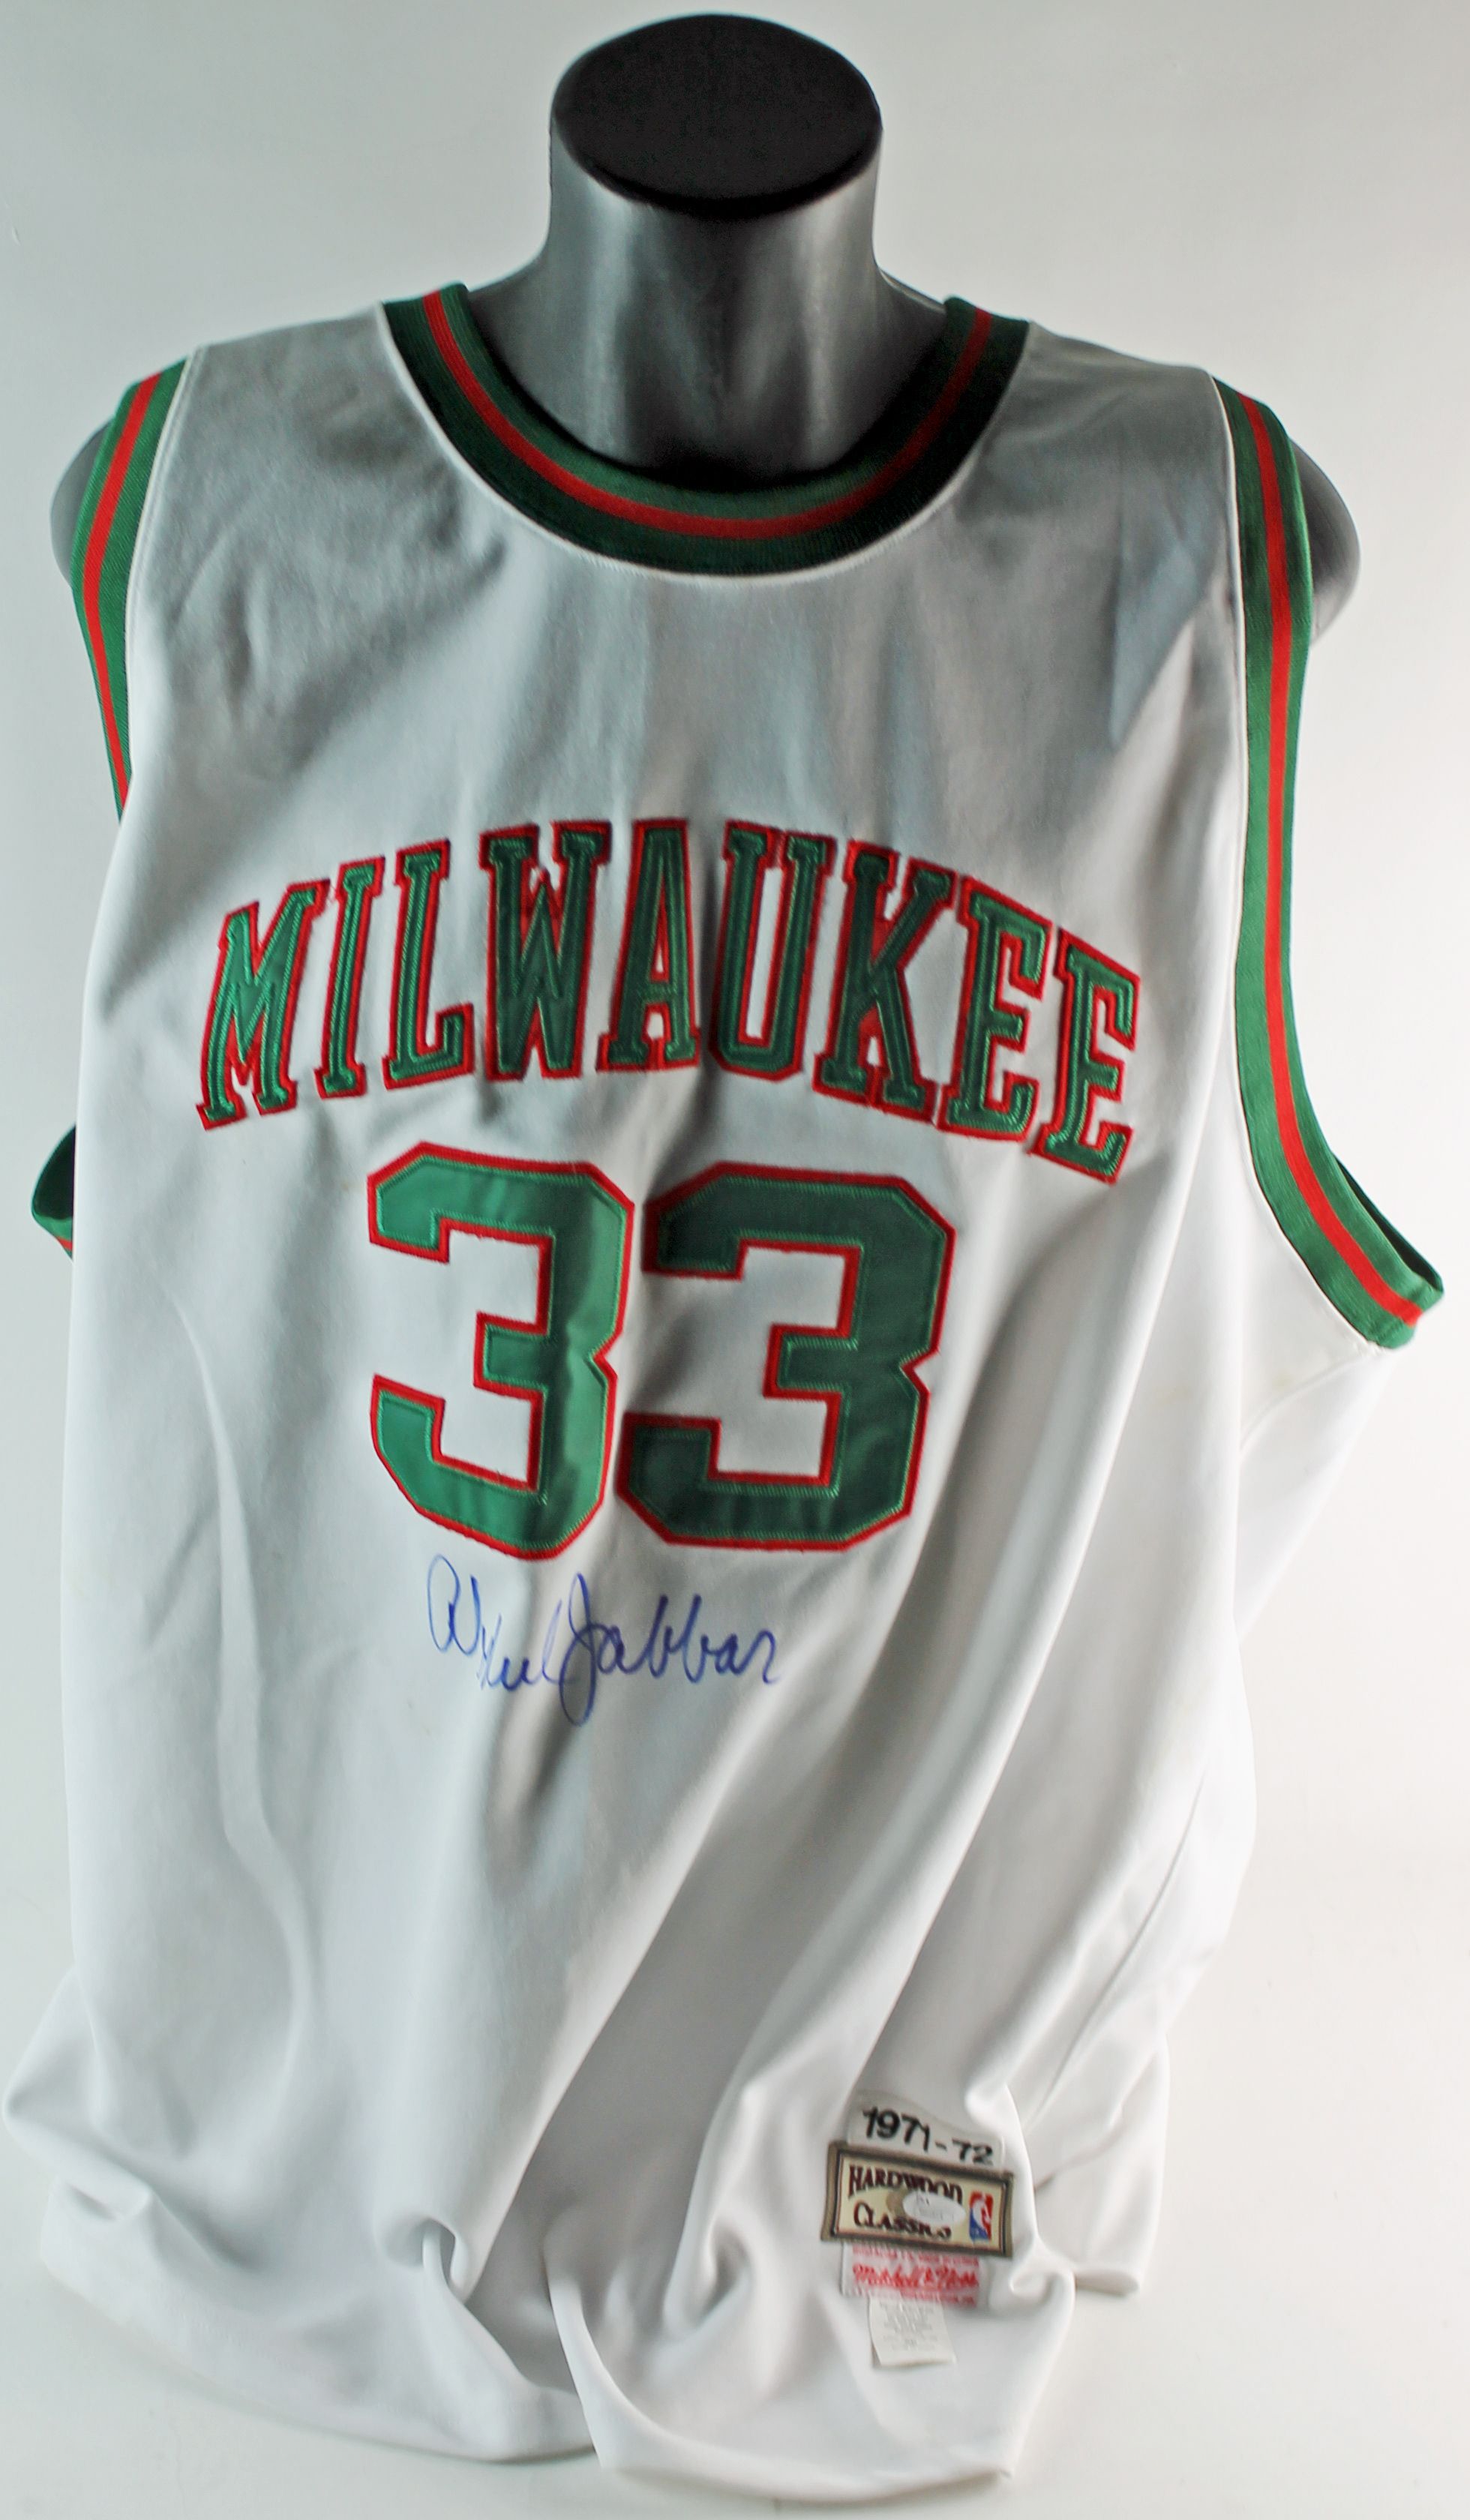 Kareem Abdul-Jabbar Signed Milwaukee Bucks Jersey sold at auction